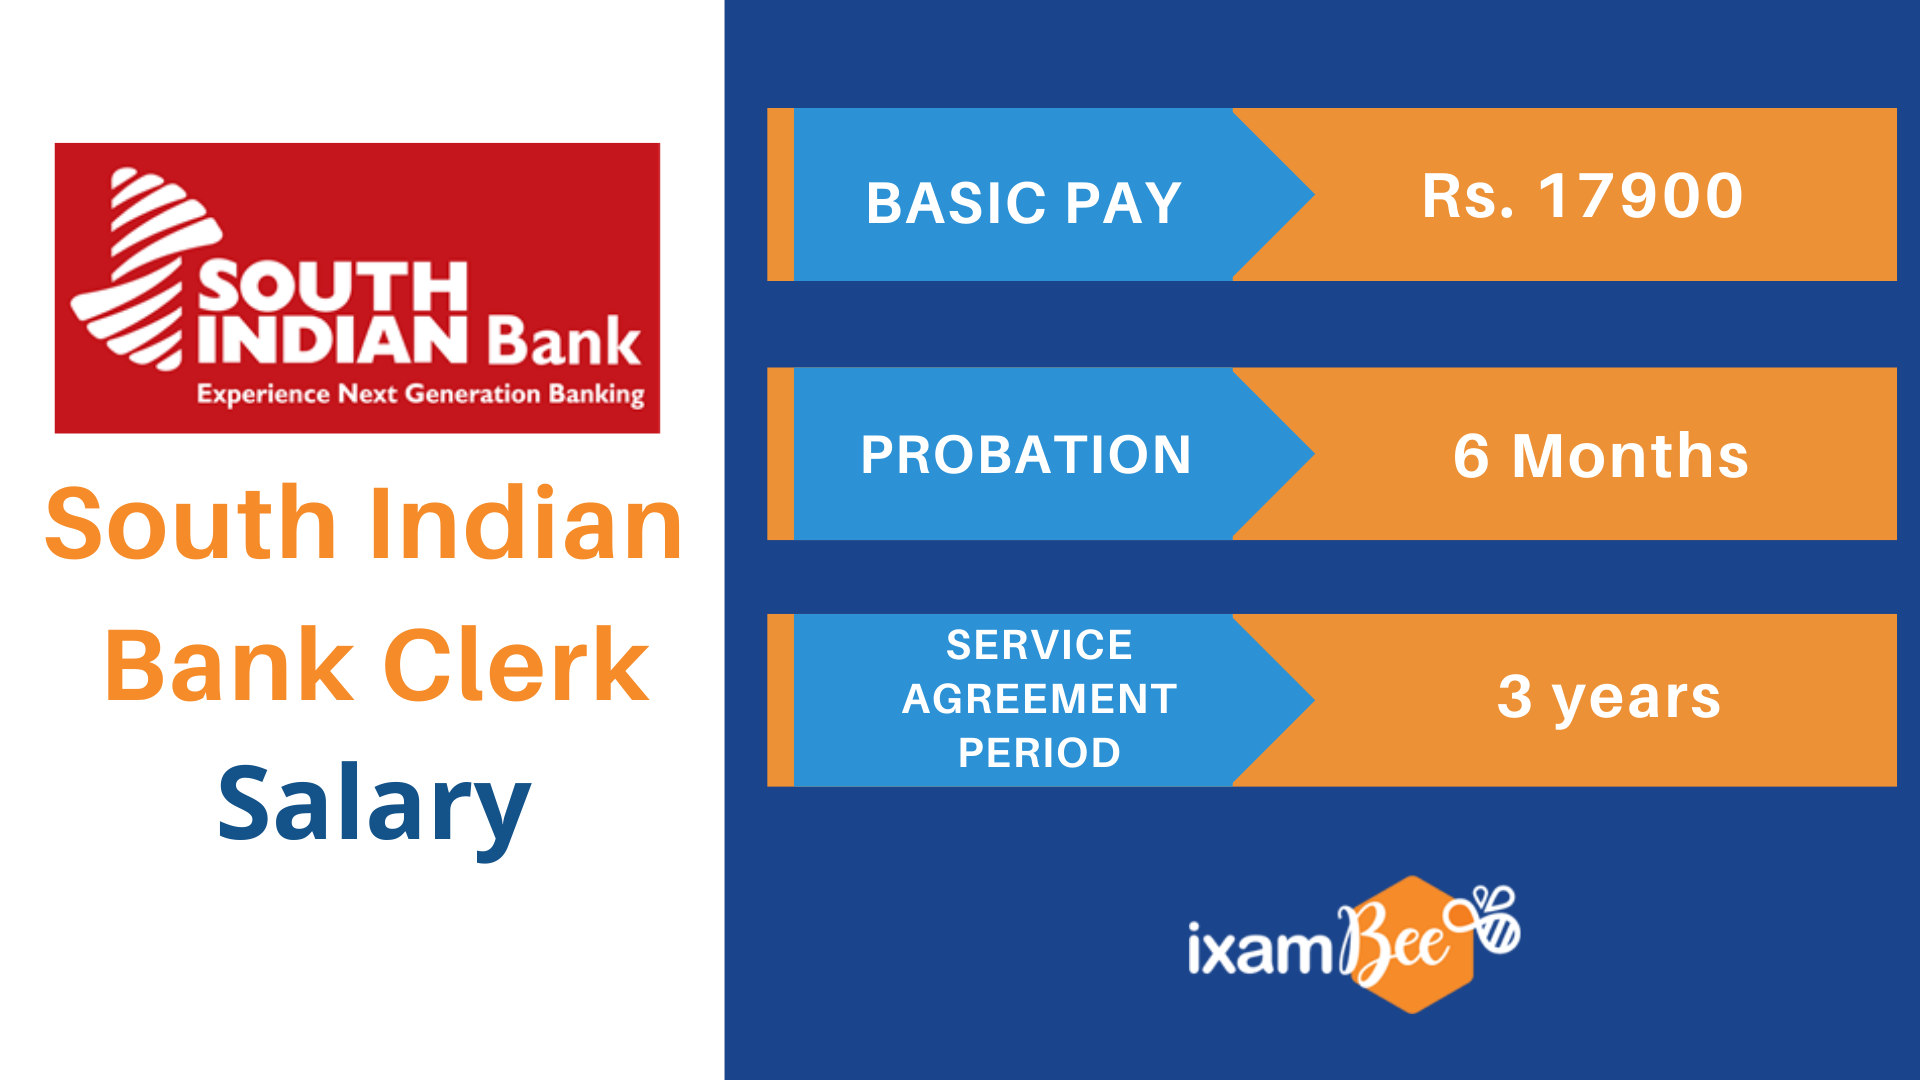 South Indian Bank Clerk Salary